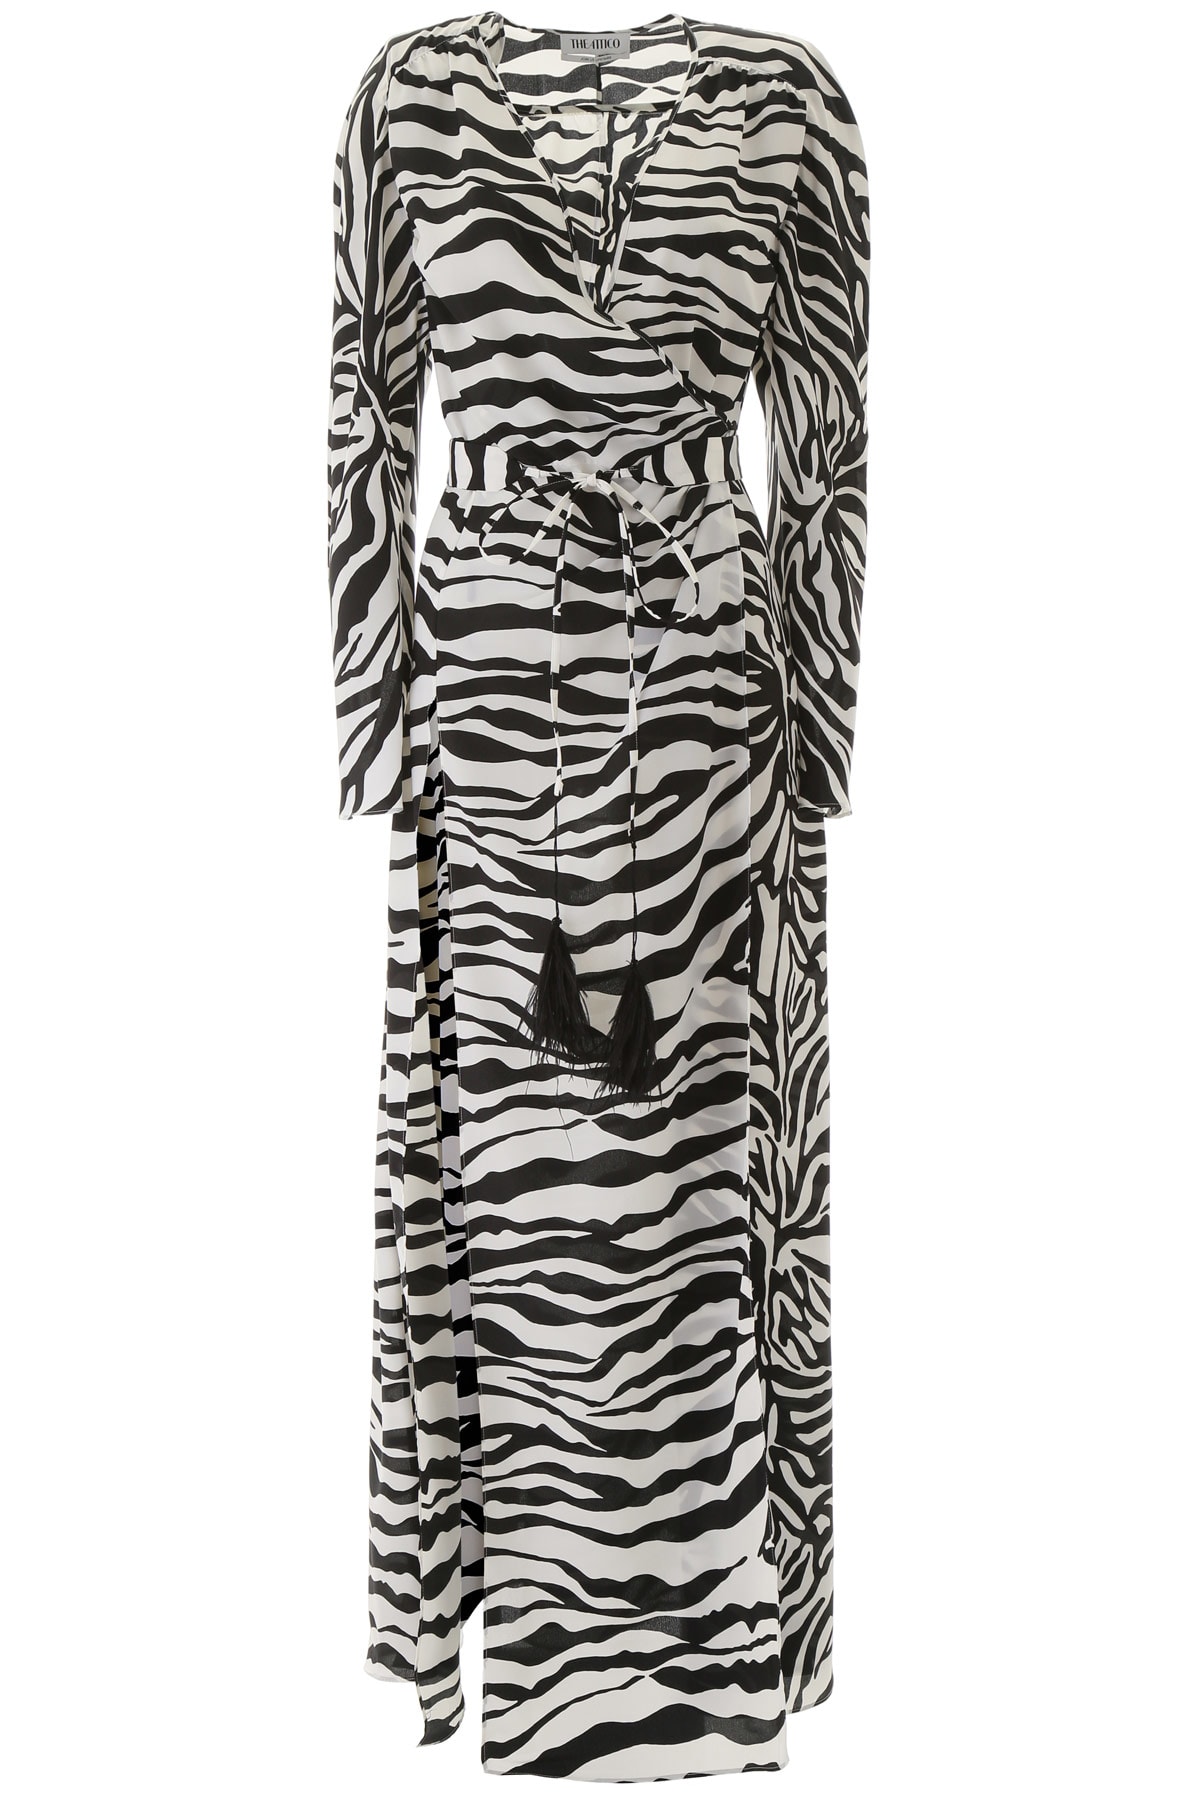 The Attico Zebra Print Dress